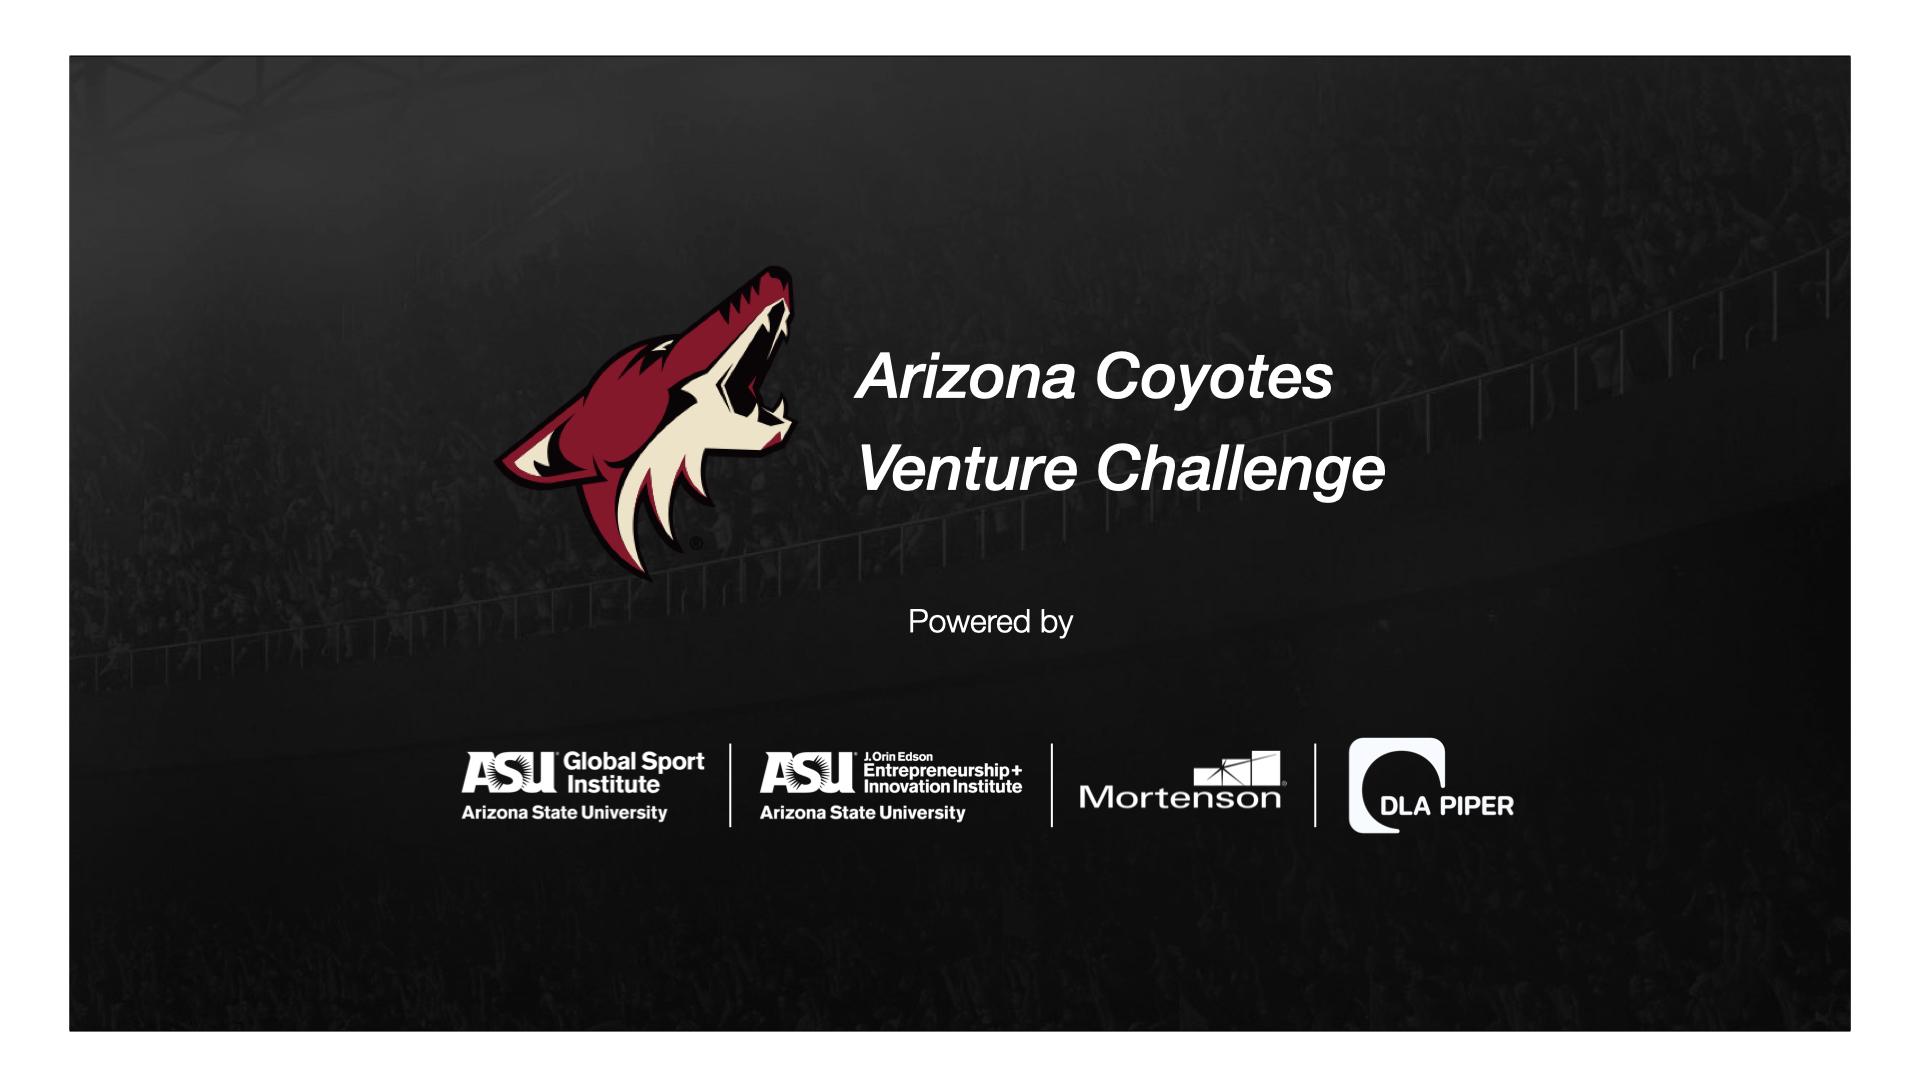 Arizona Coyotes logo with Global Sport Institute, Entrepreneurship + Innovation, Mortenson, and DLA Piper logos below.